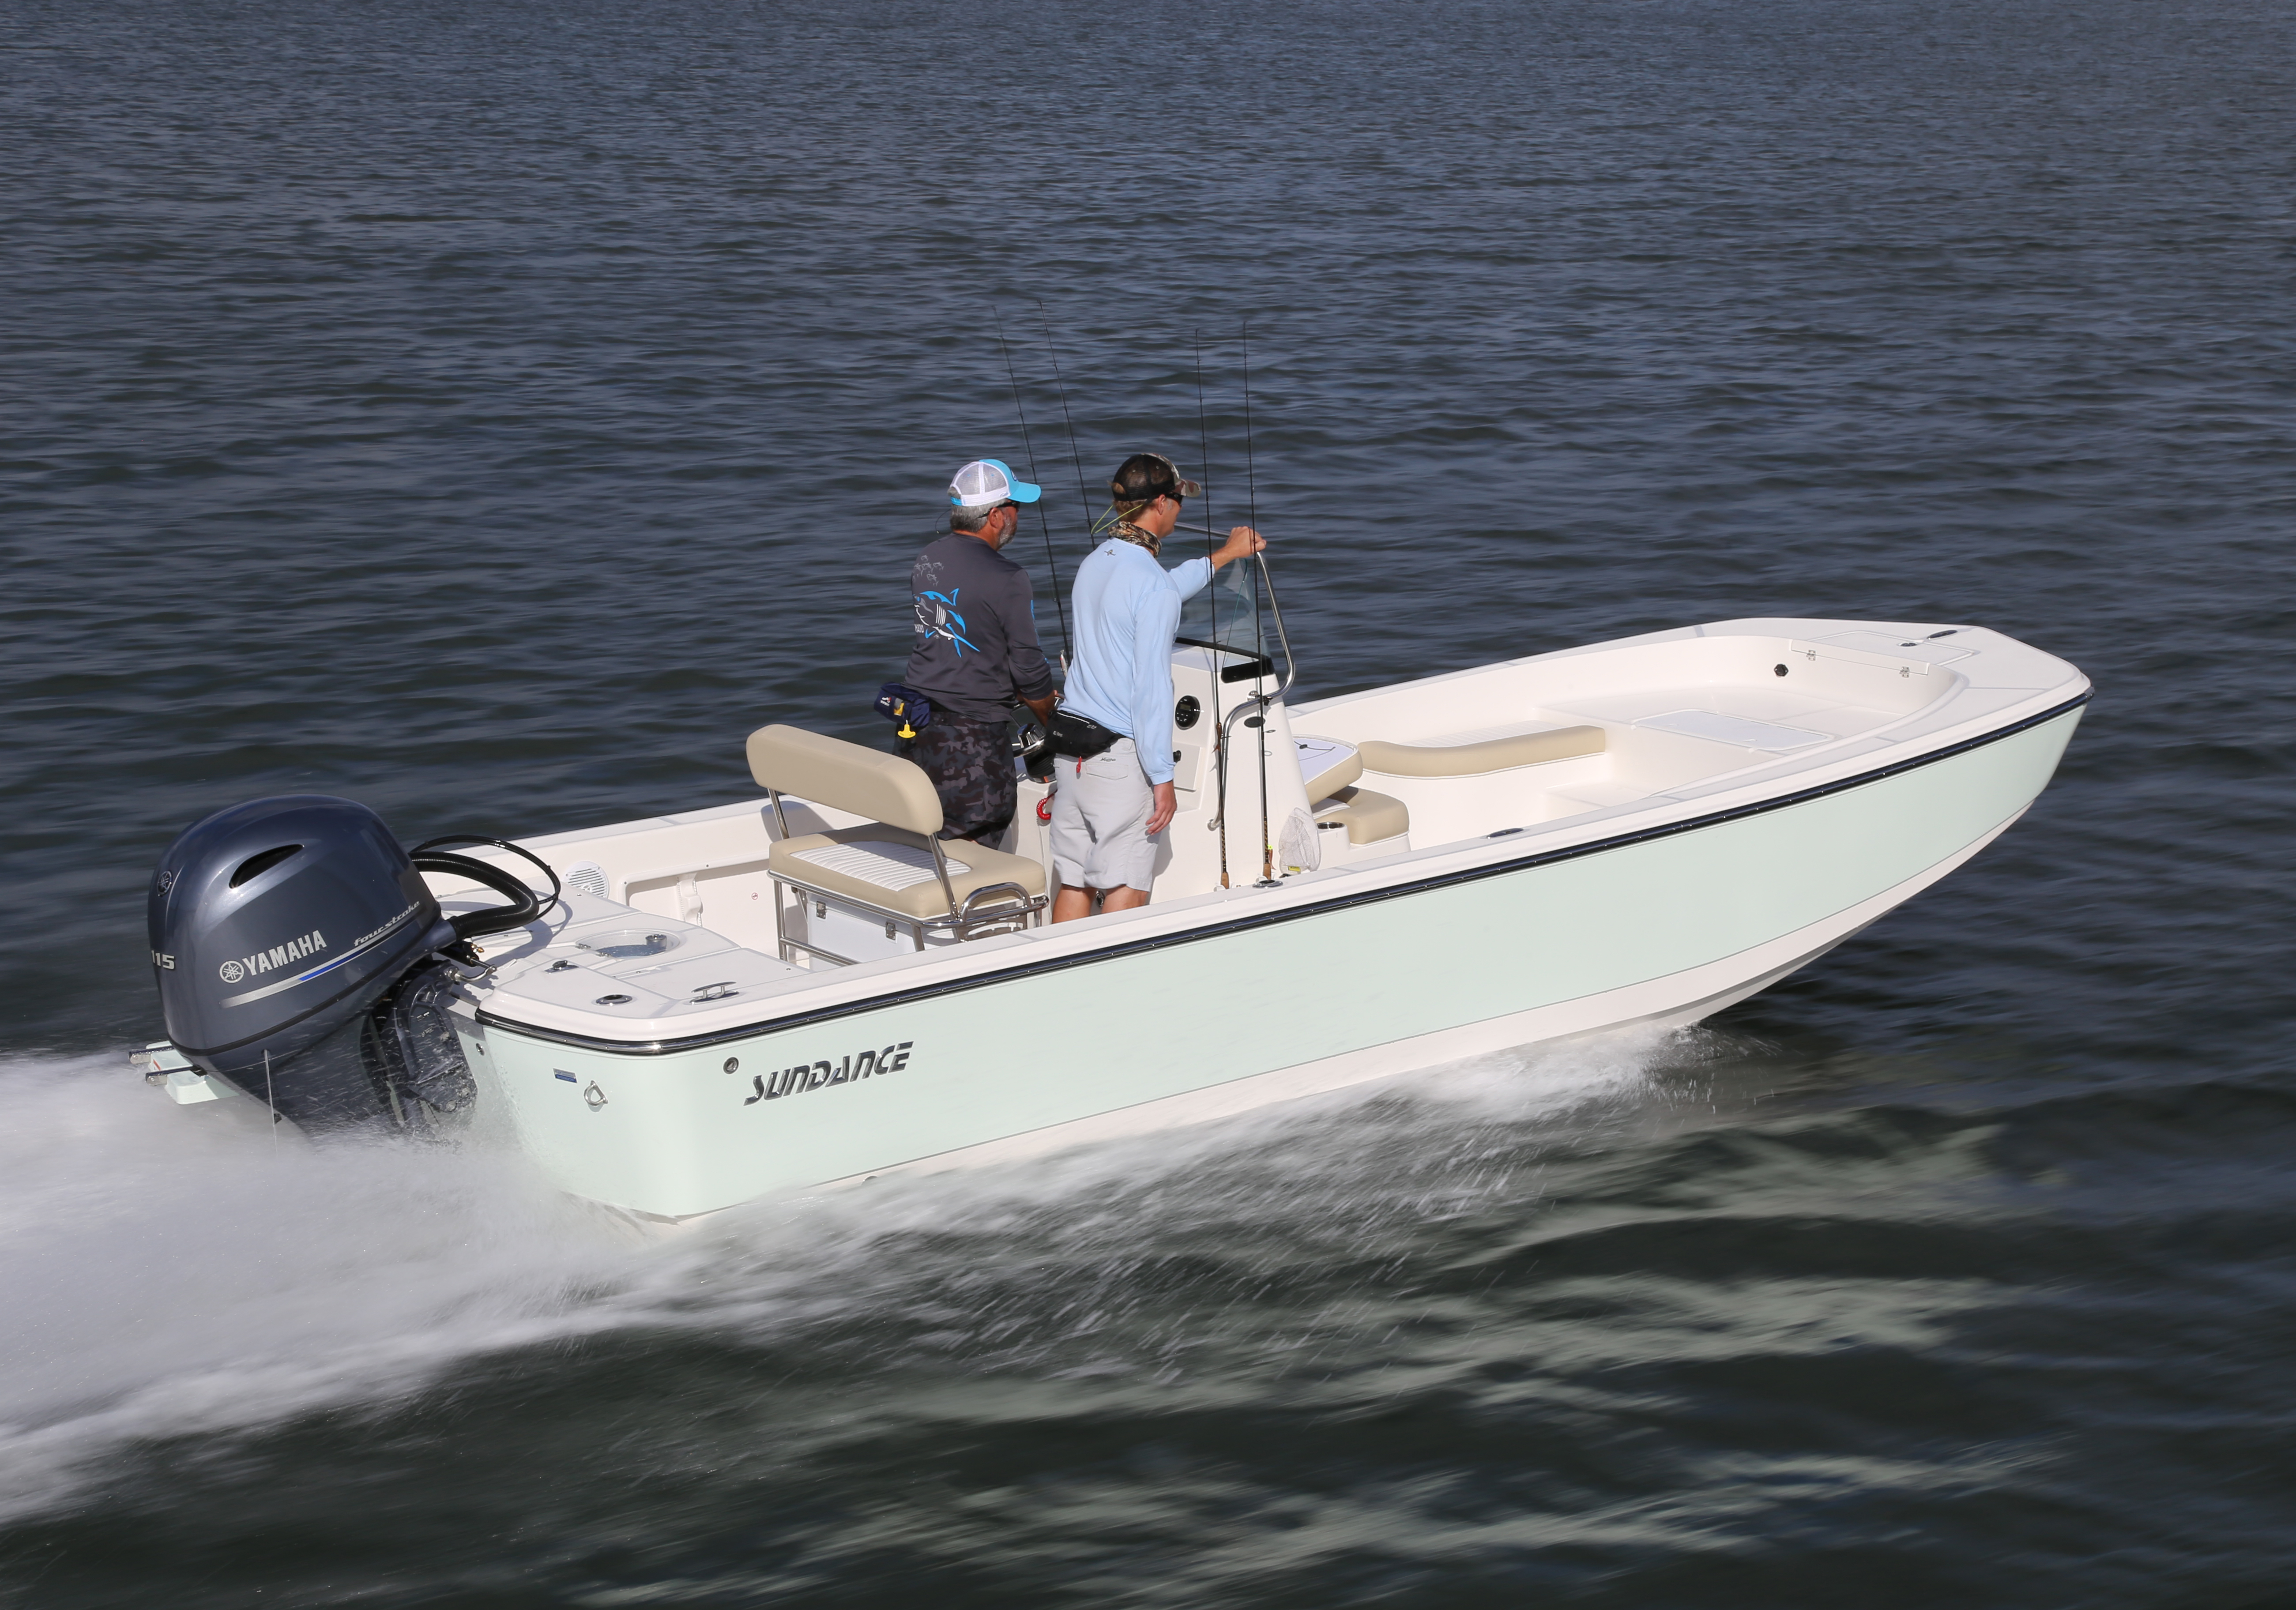 Boat Review - Sundance DX22 HPX